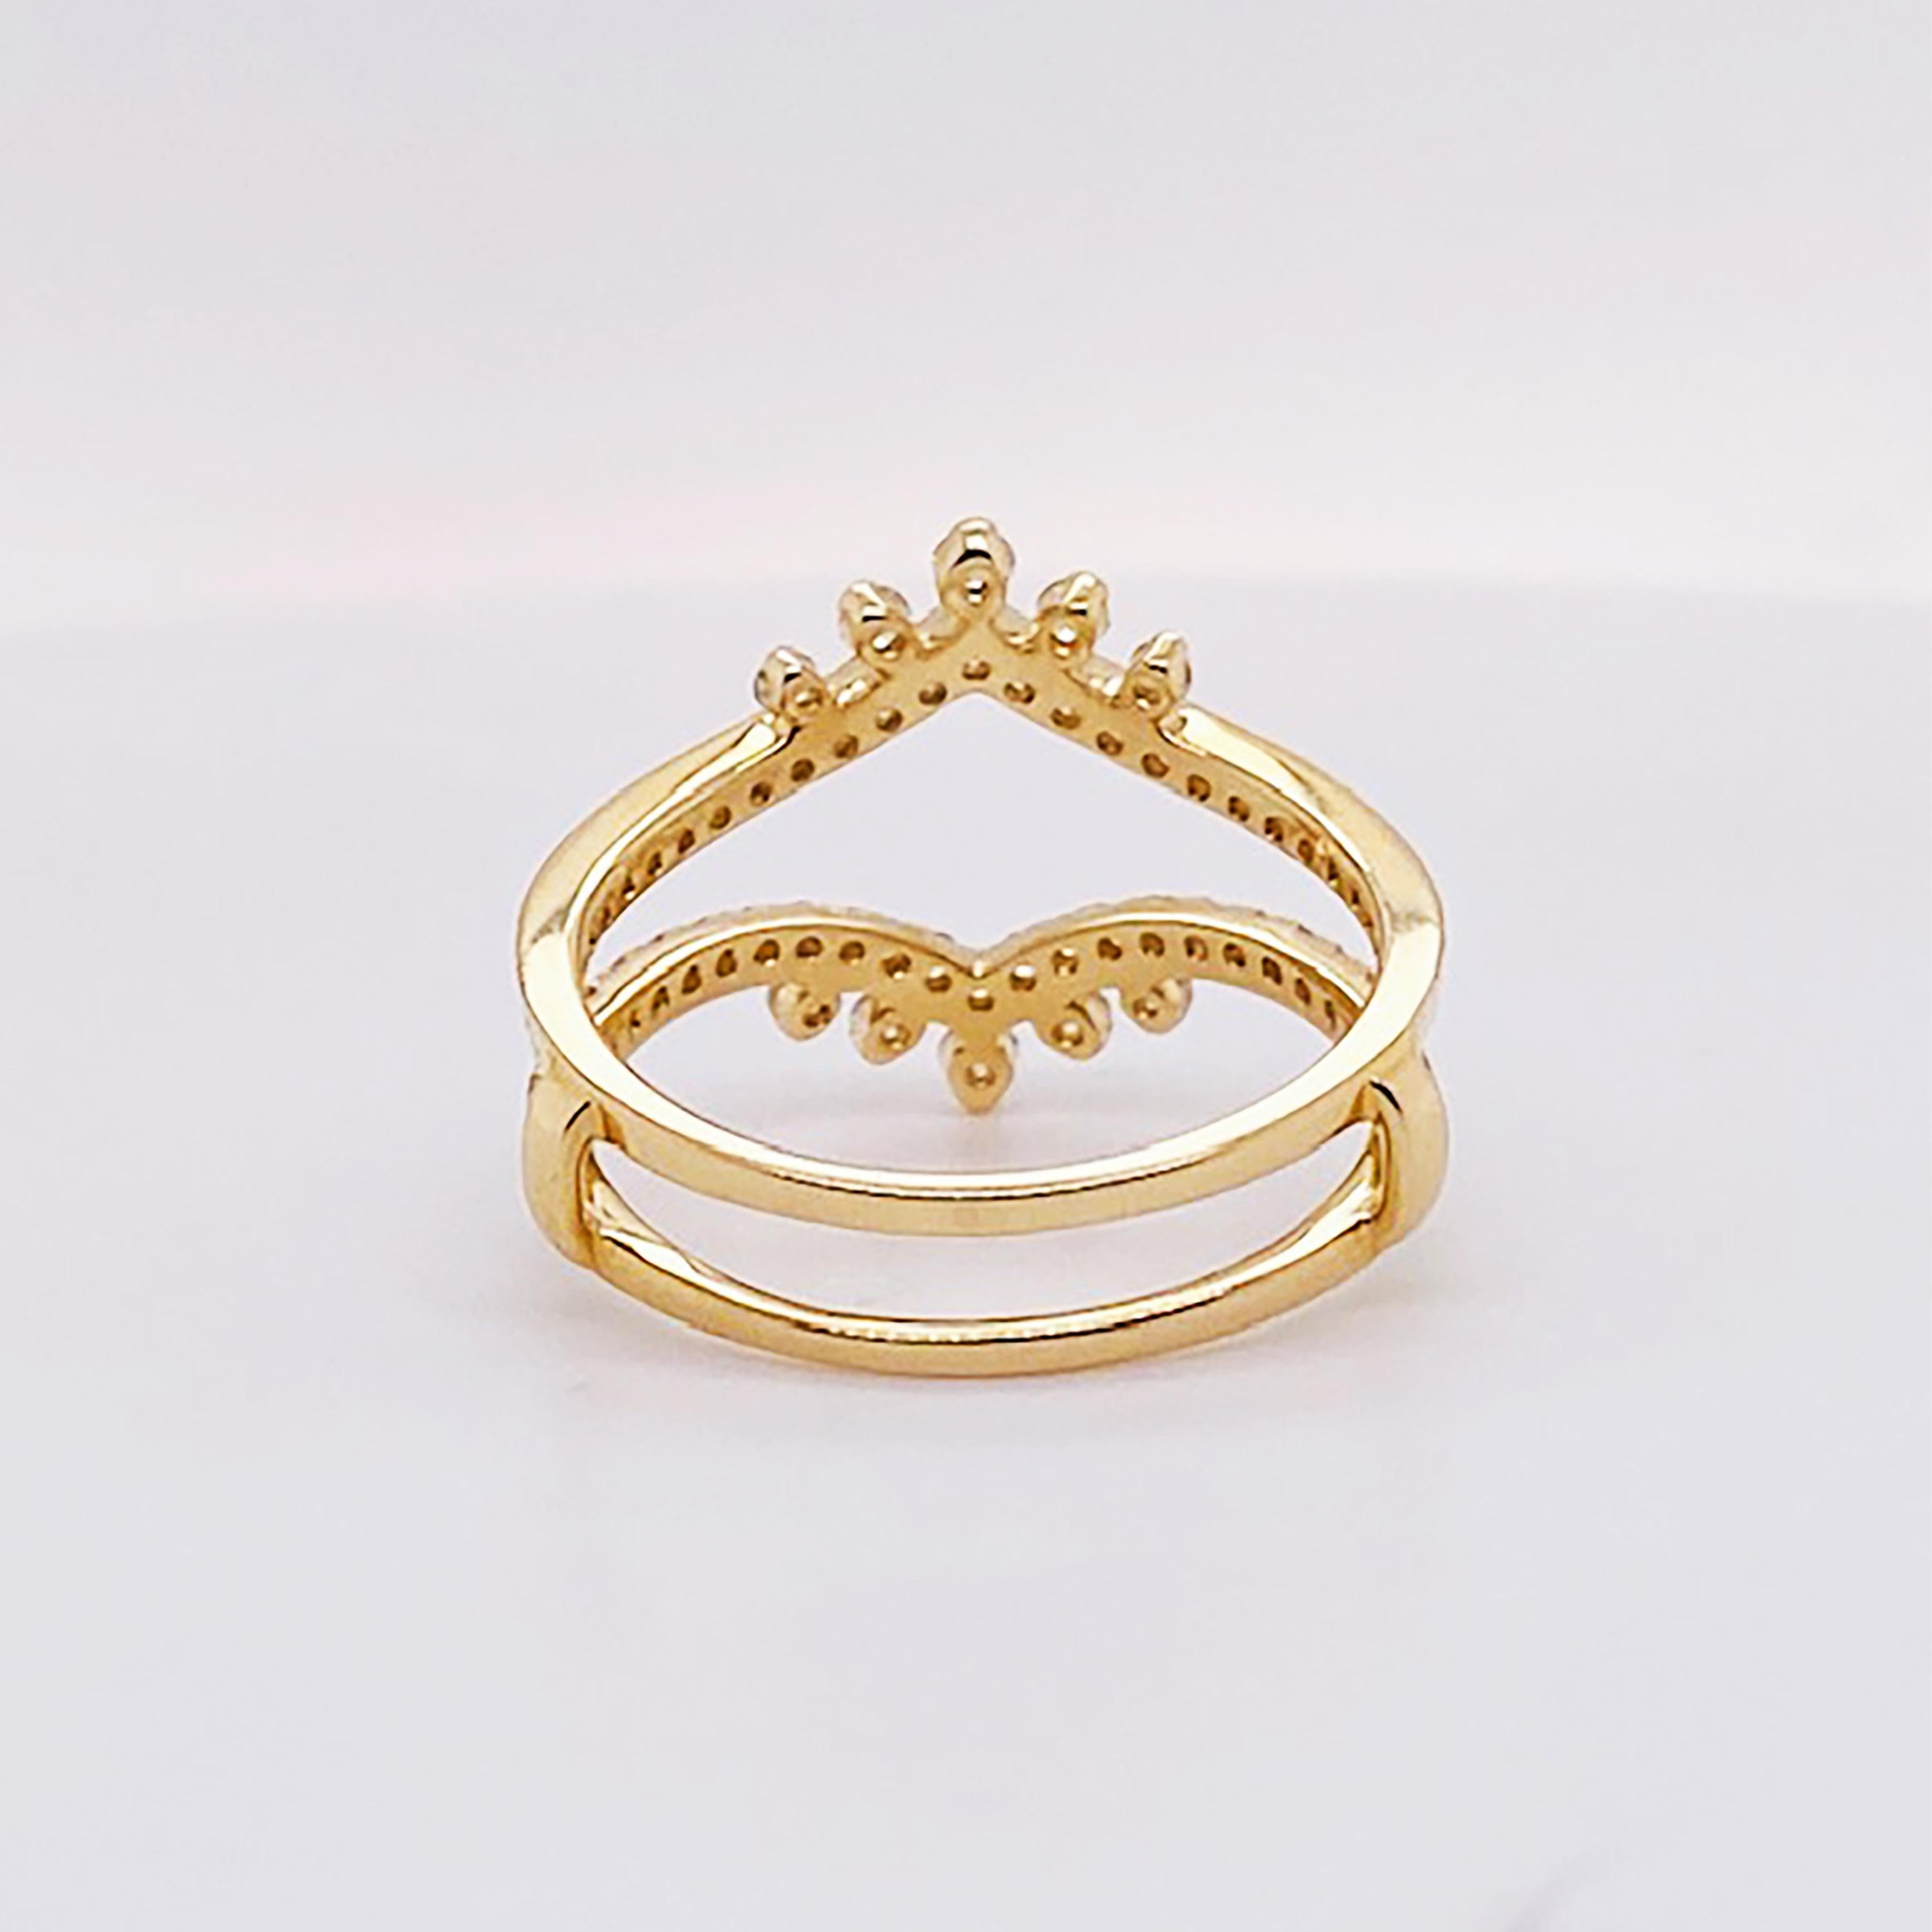 For Sale:  Diamond Crown Ring Enhancer 14K Gold .55 Carat Diamond Ring Guard Wedding Band 7